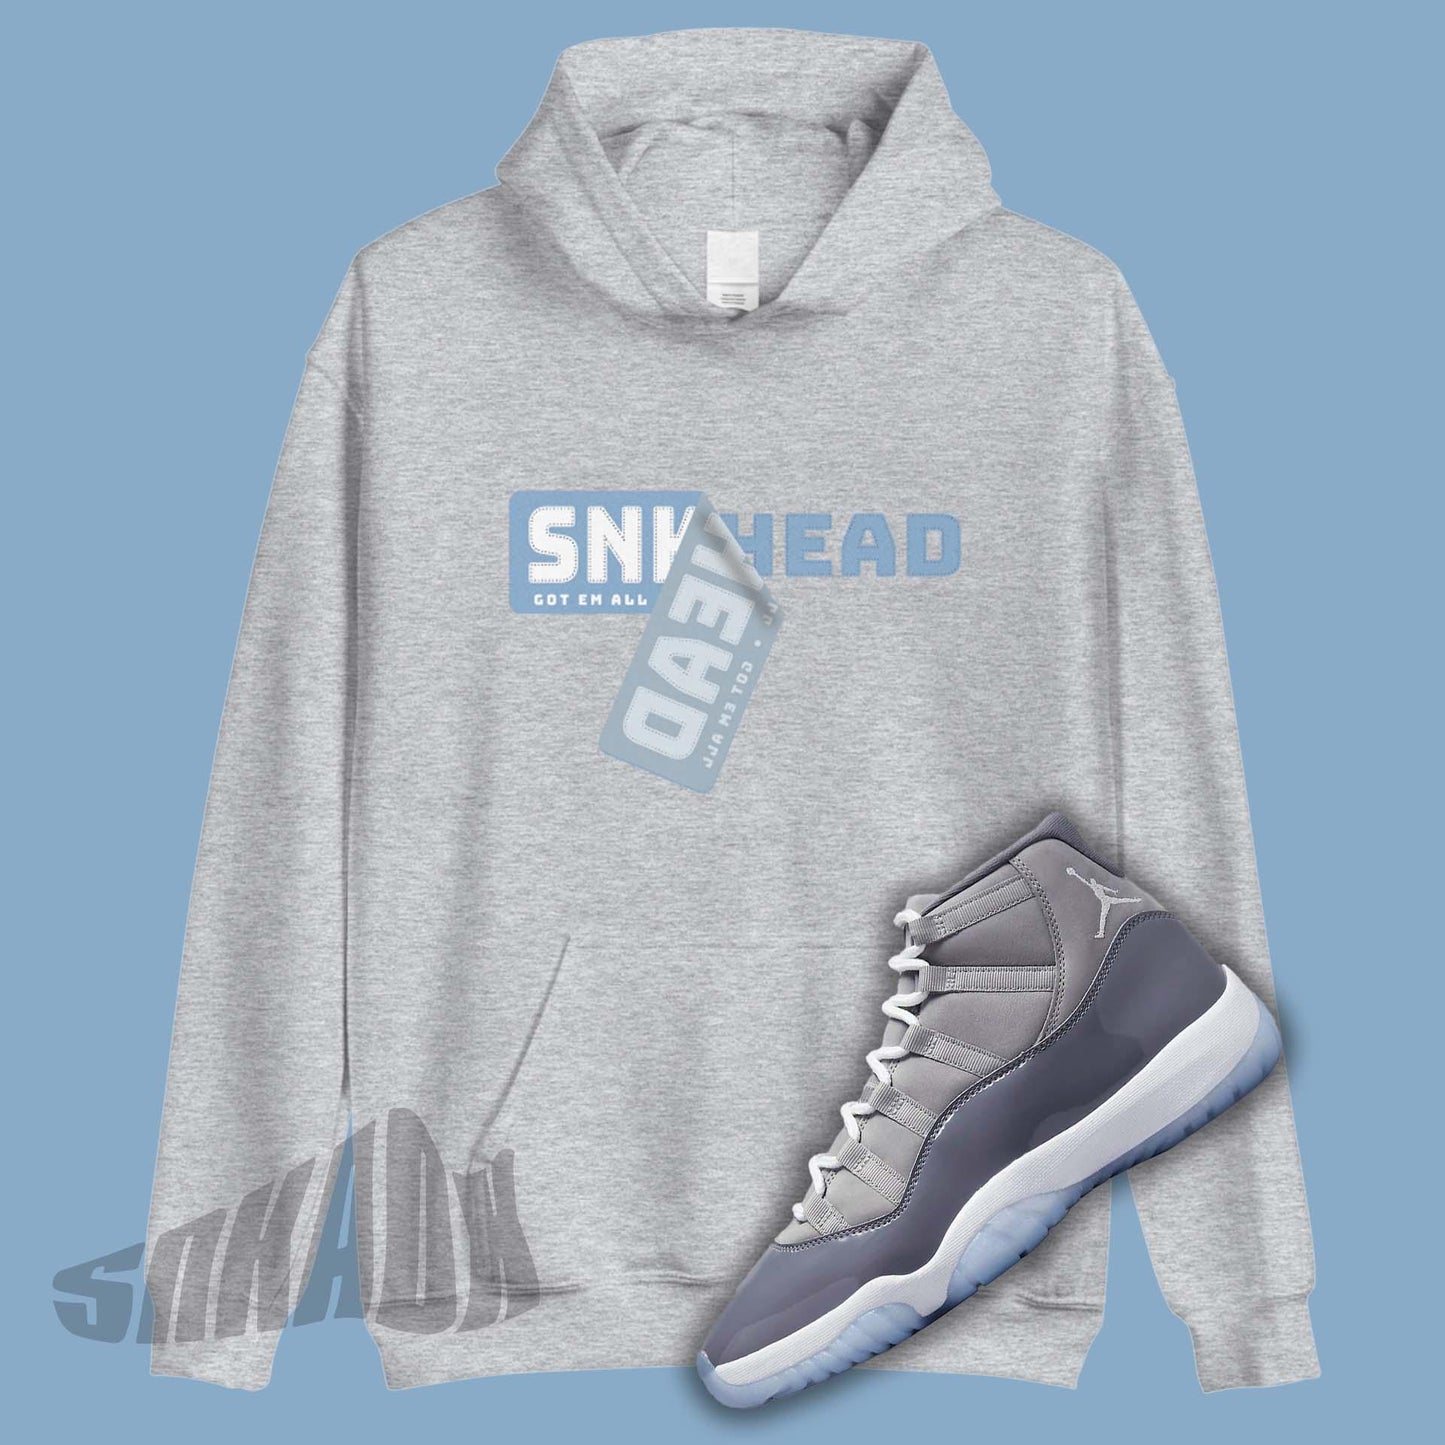 Sneakerhead Sticker to match Air Jordan 11 Cool Grey